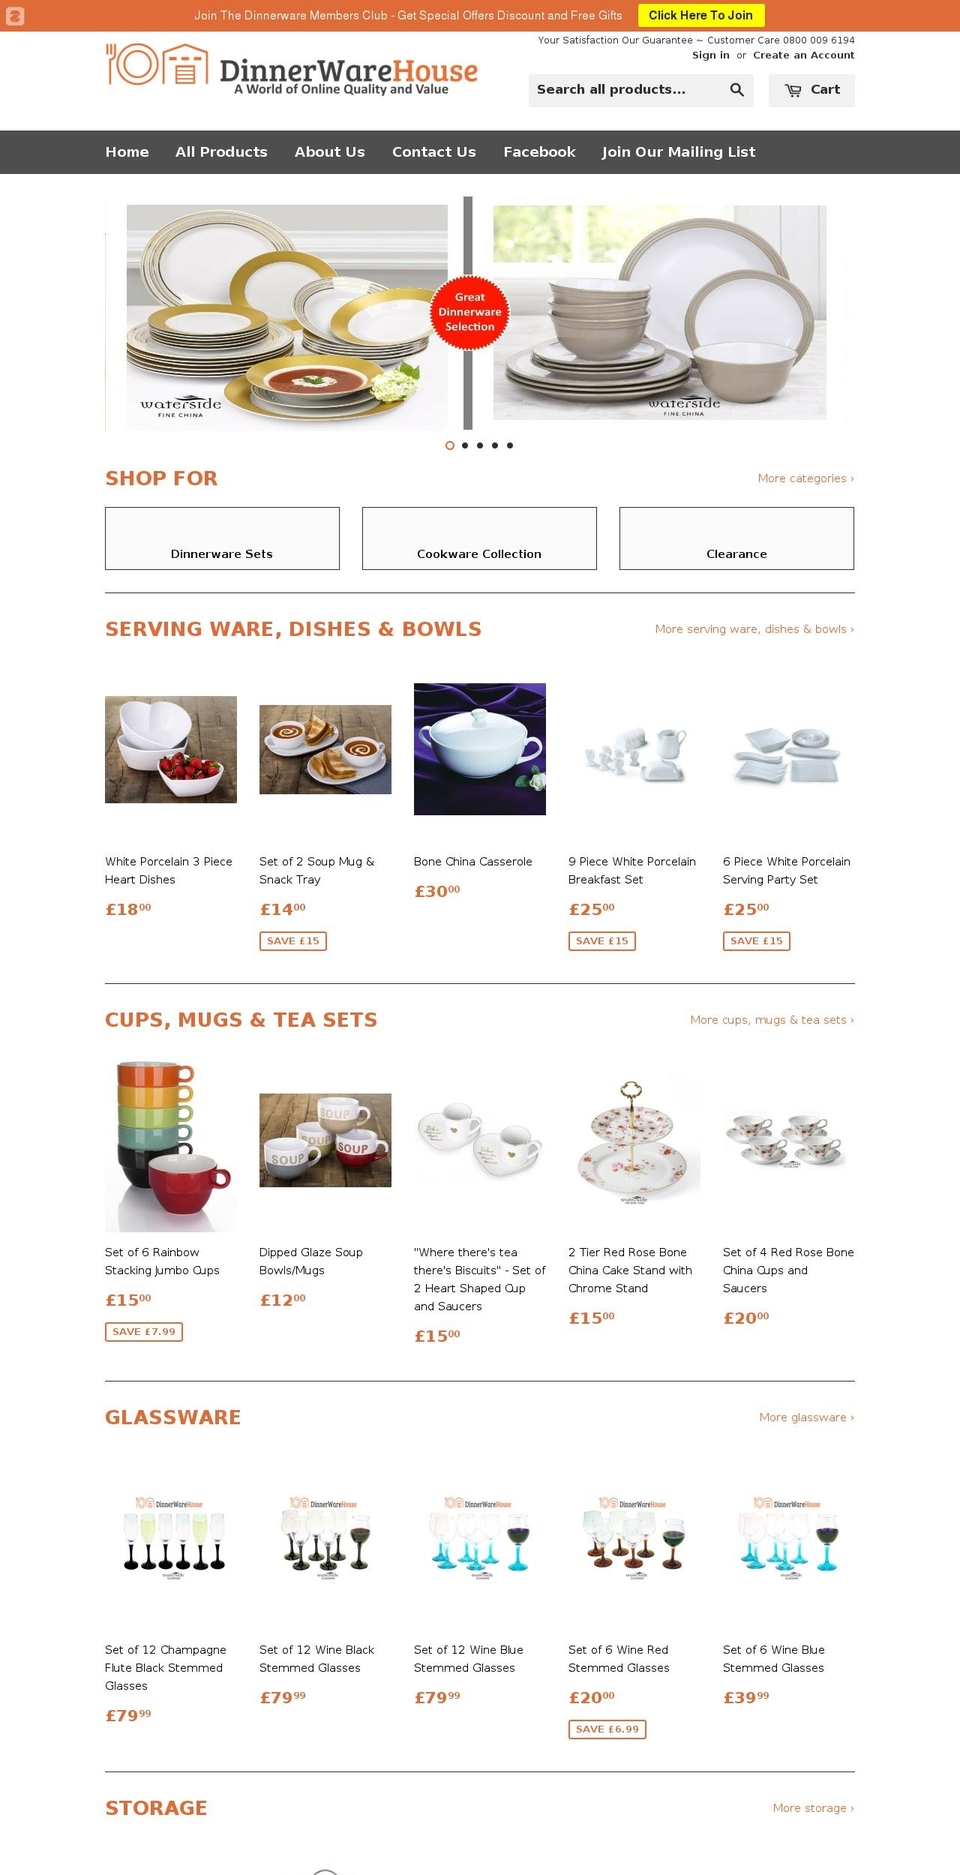 dinnerwarehouse.com shopify website screenshot